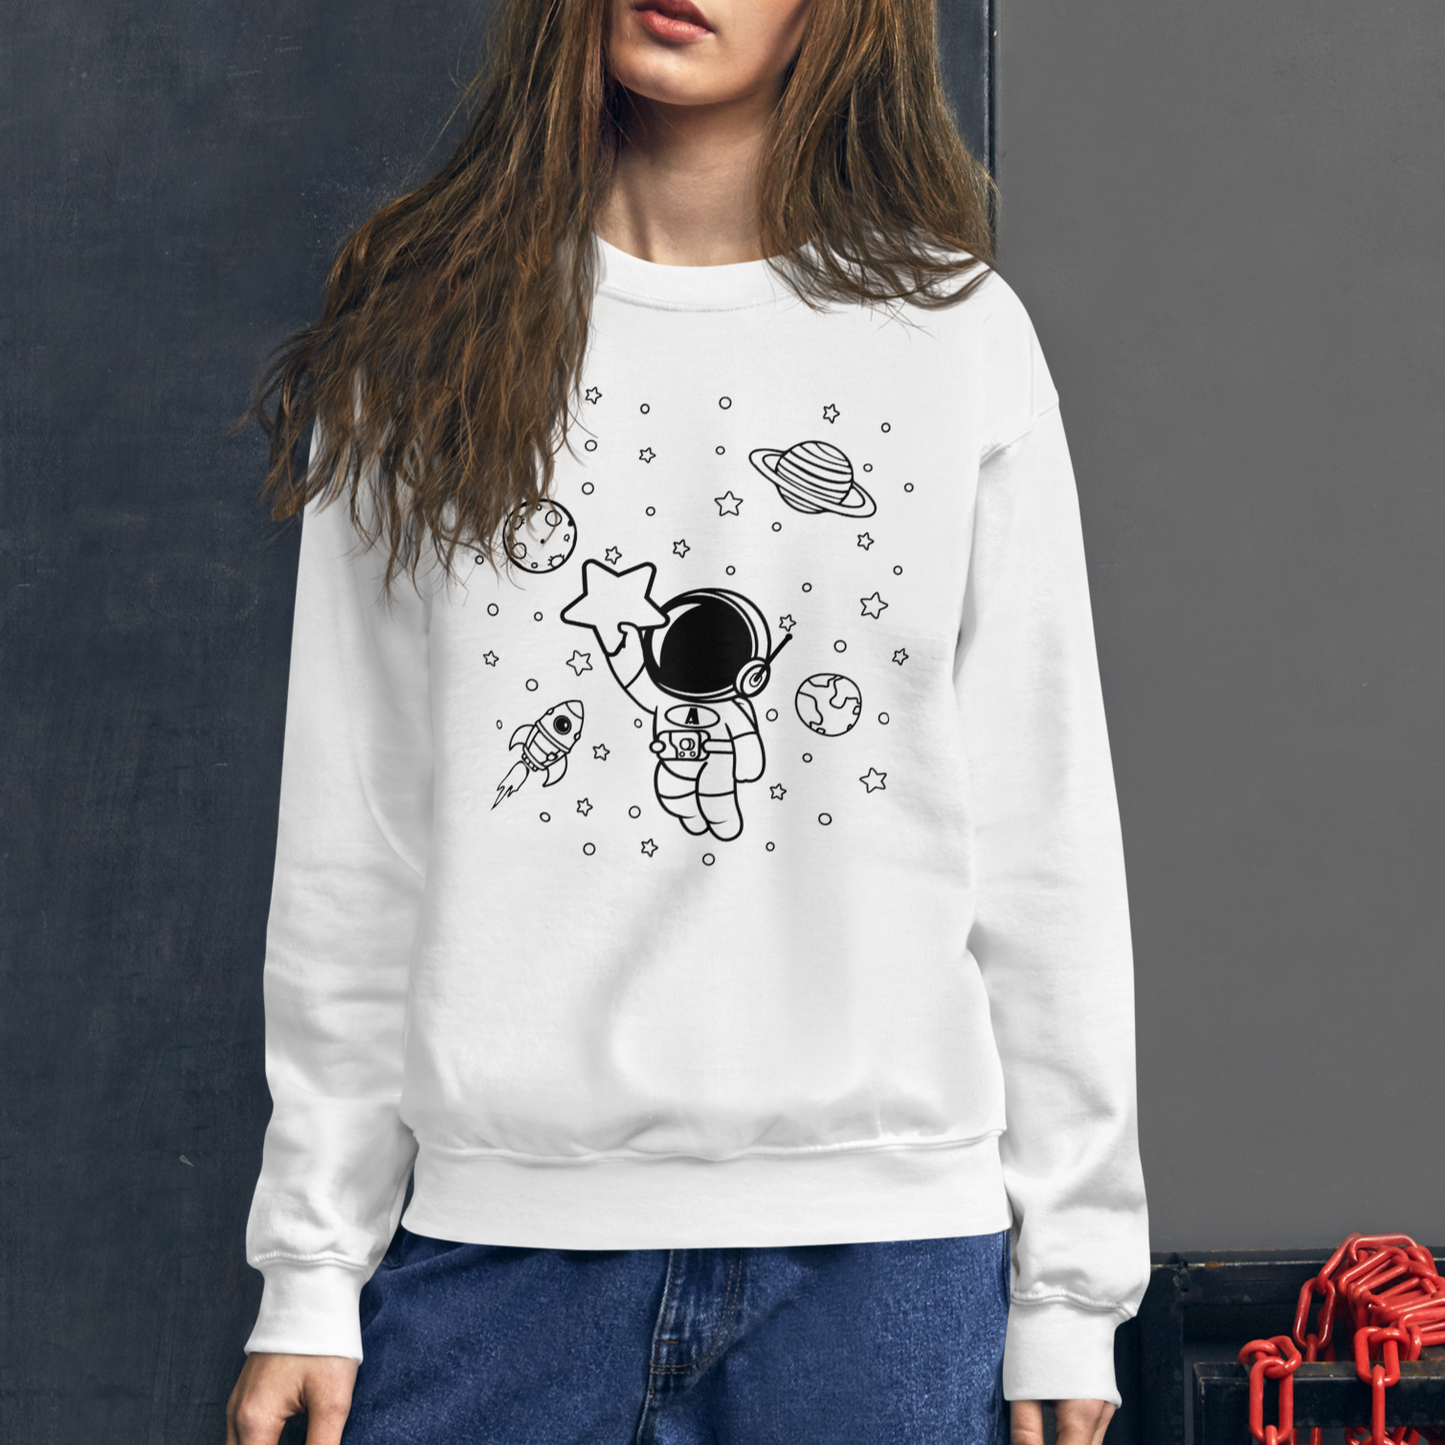 Unisex sweatshirt: Reach for the stars